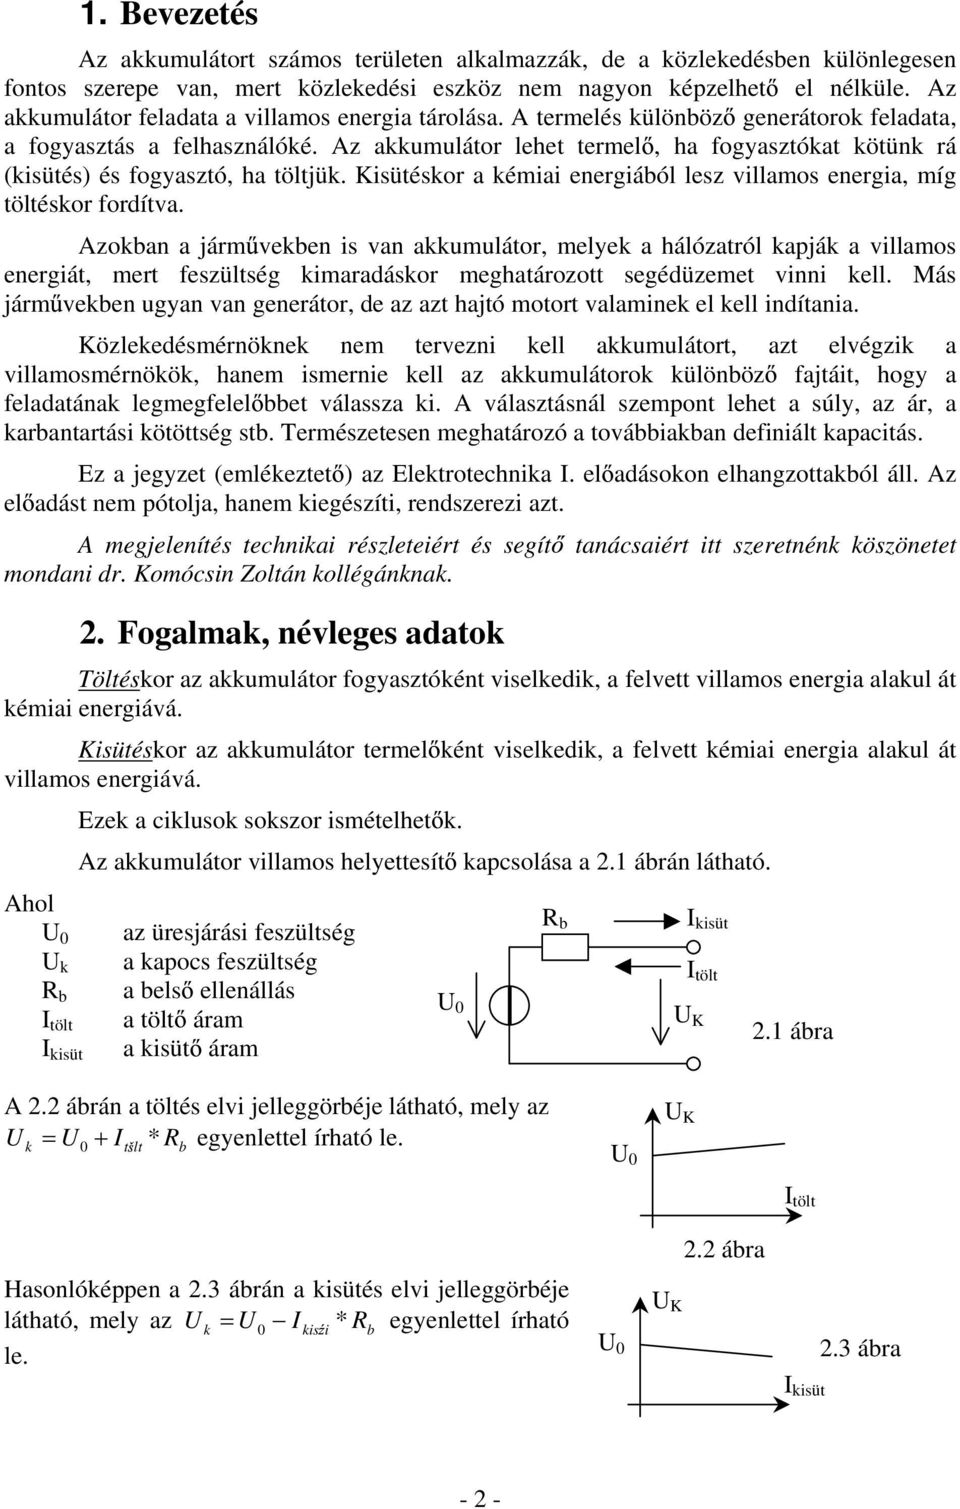 Elektrotechnika I. Akkumulátorok PDF Free Download